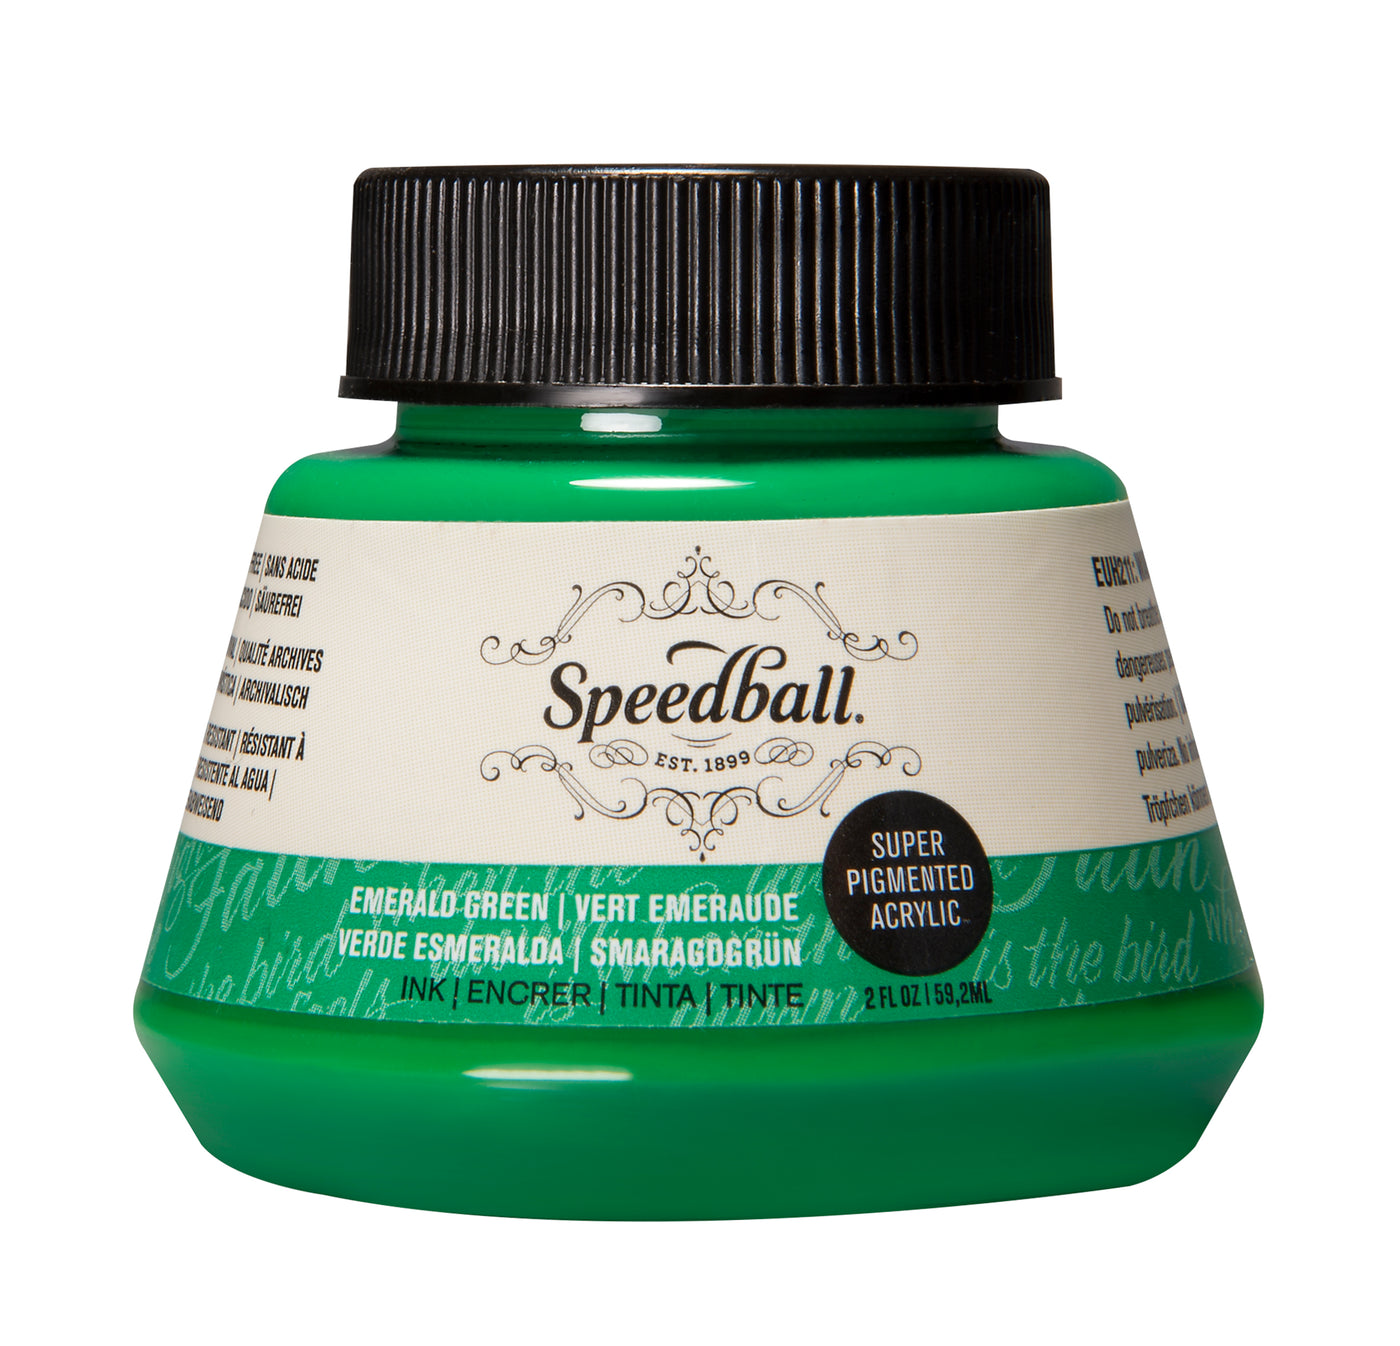 Speedball Super Pigmented Acrylic Emerald Green - 2 oz Ink